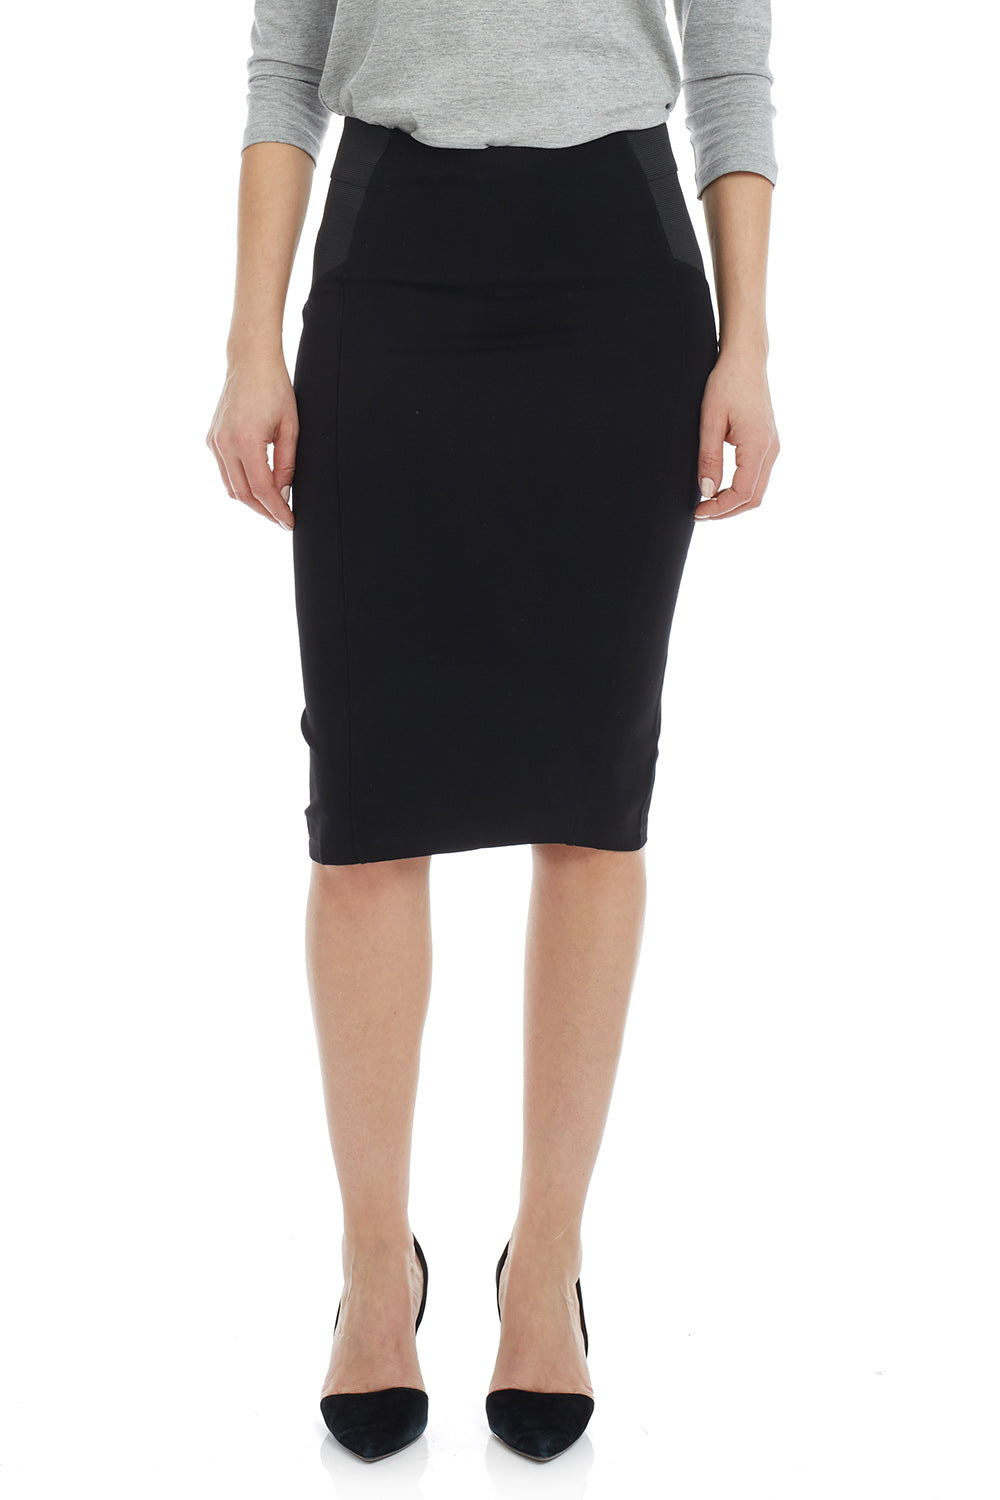 Esteez CHARLOTTE Skirt - Ponte Skirt for Women with Tummy Control - BLACK